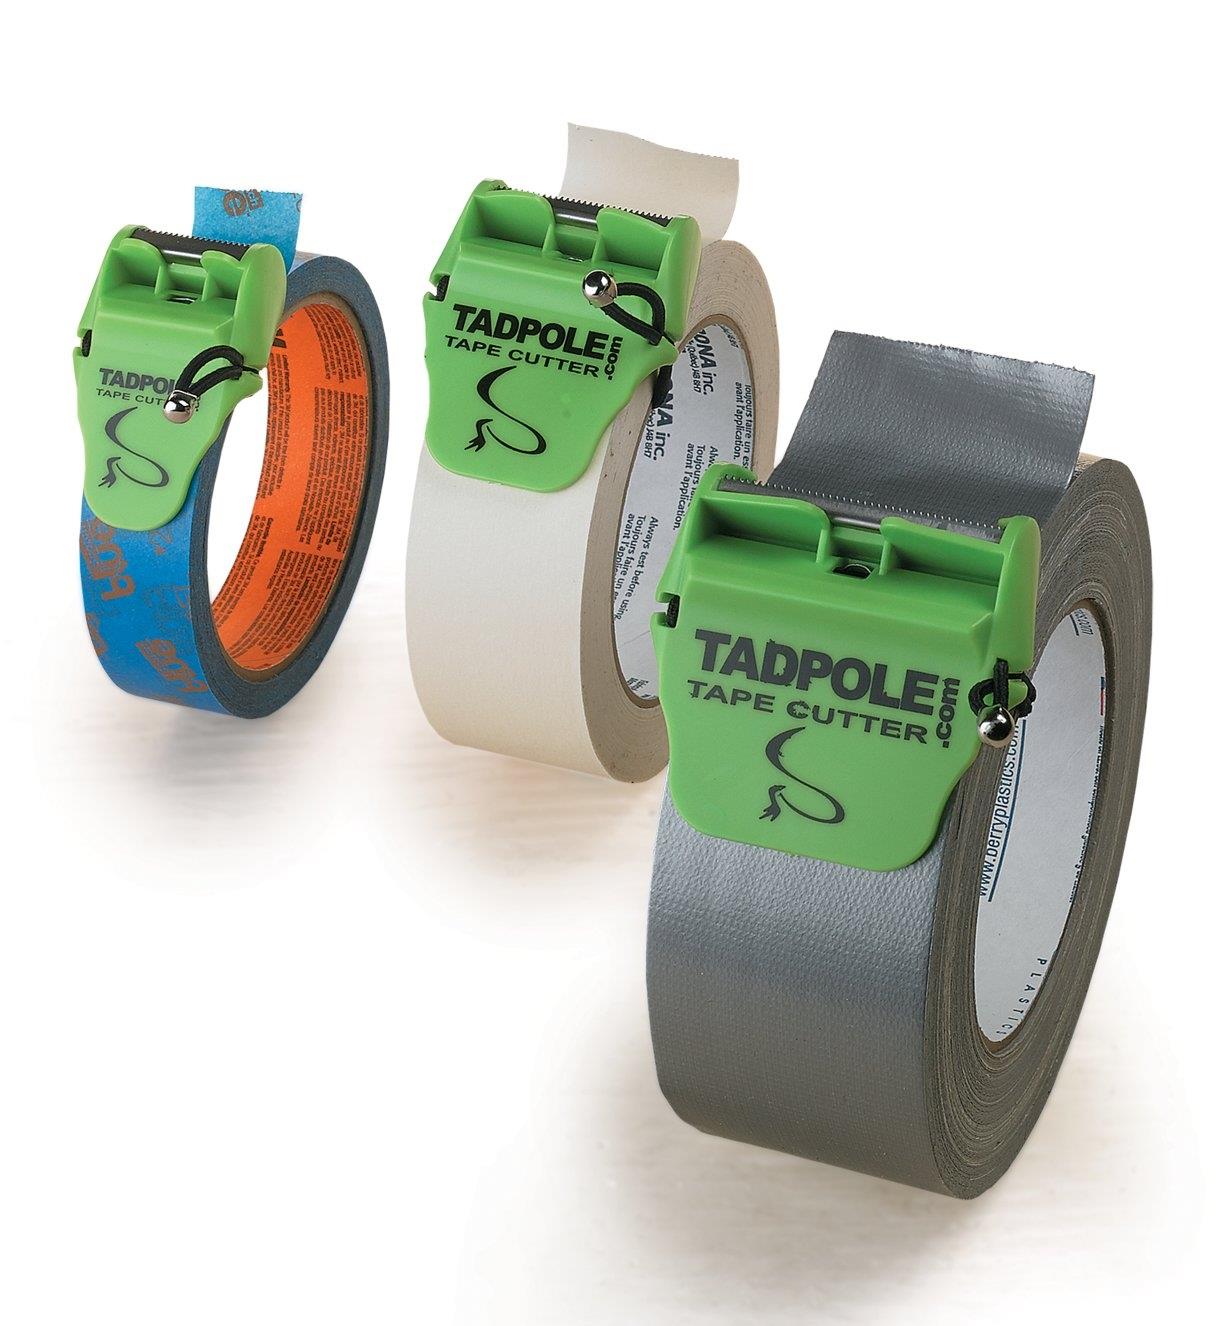 Tadpole Tape Cutter